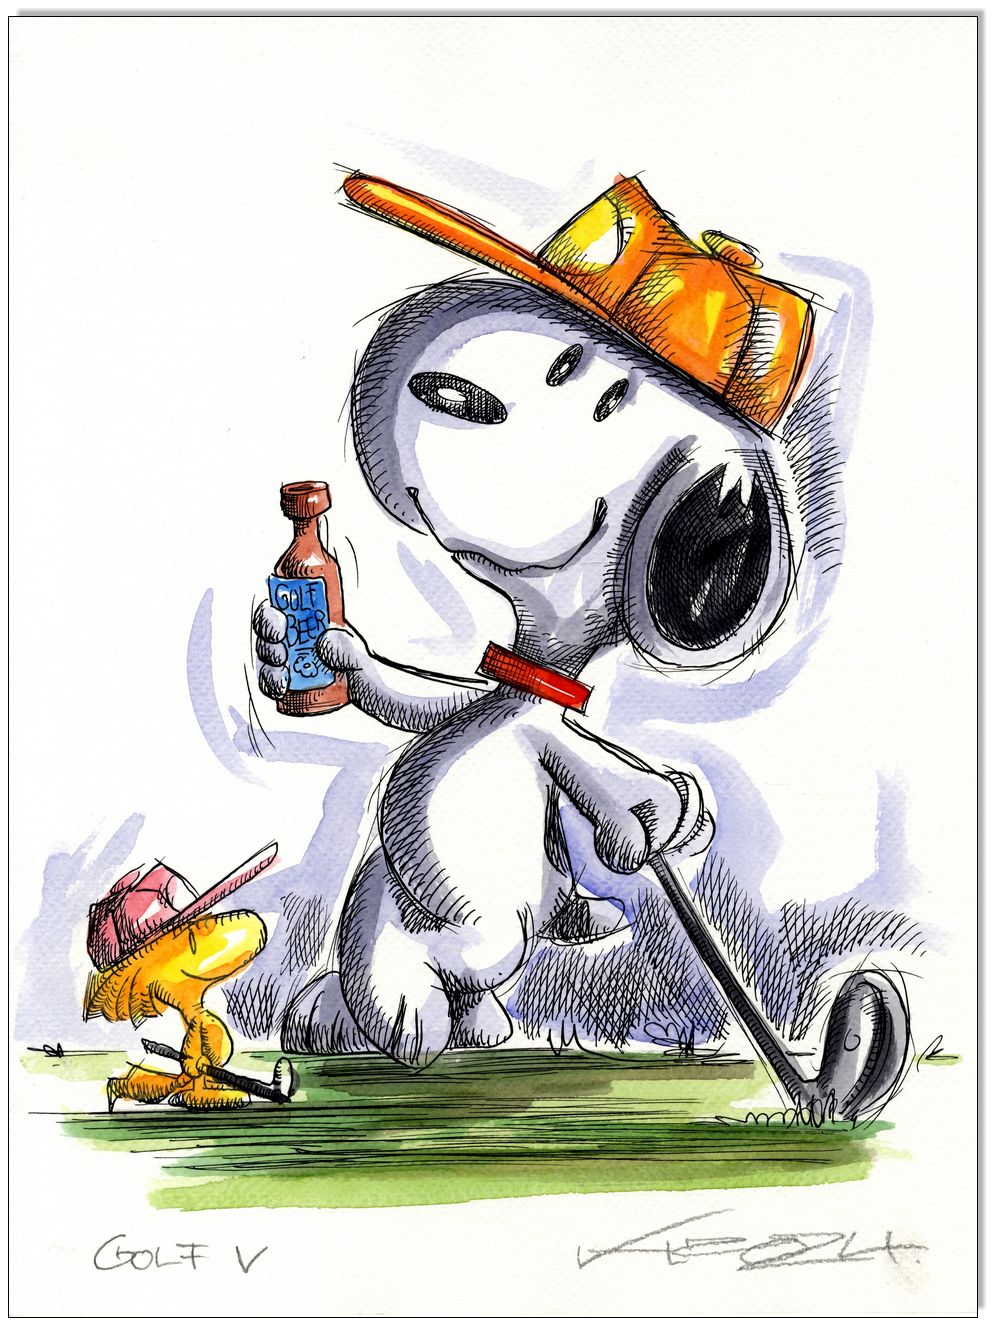 PEANUTS Snoopy Golf V - 24 x 32 cm